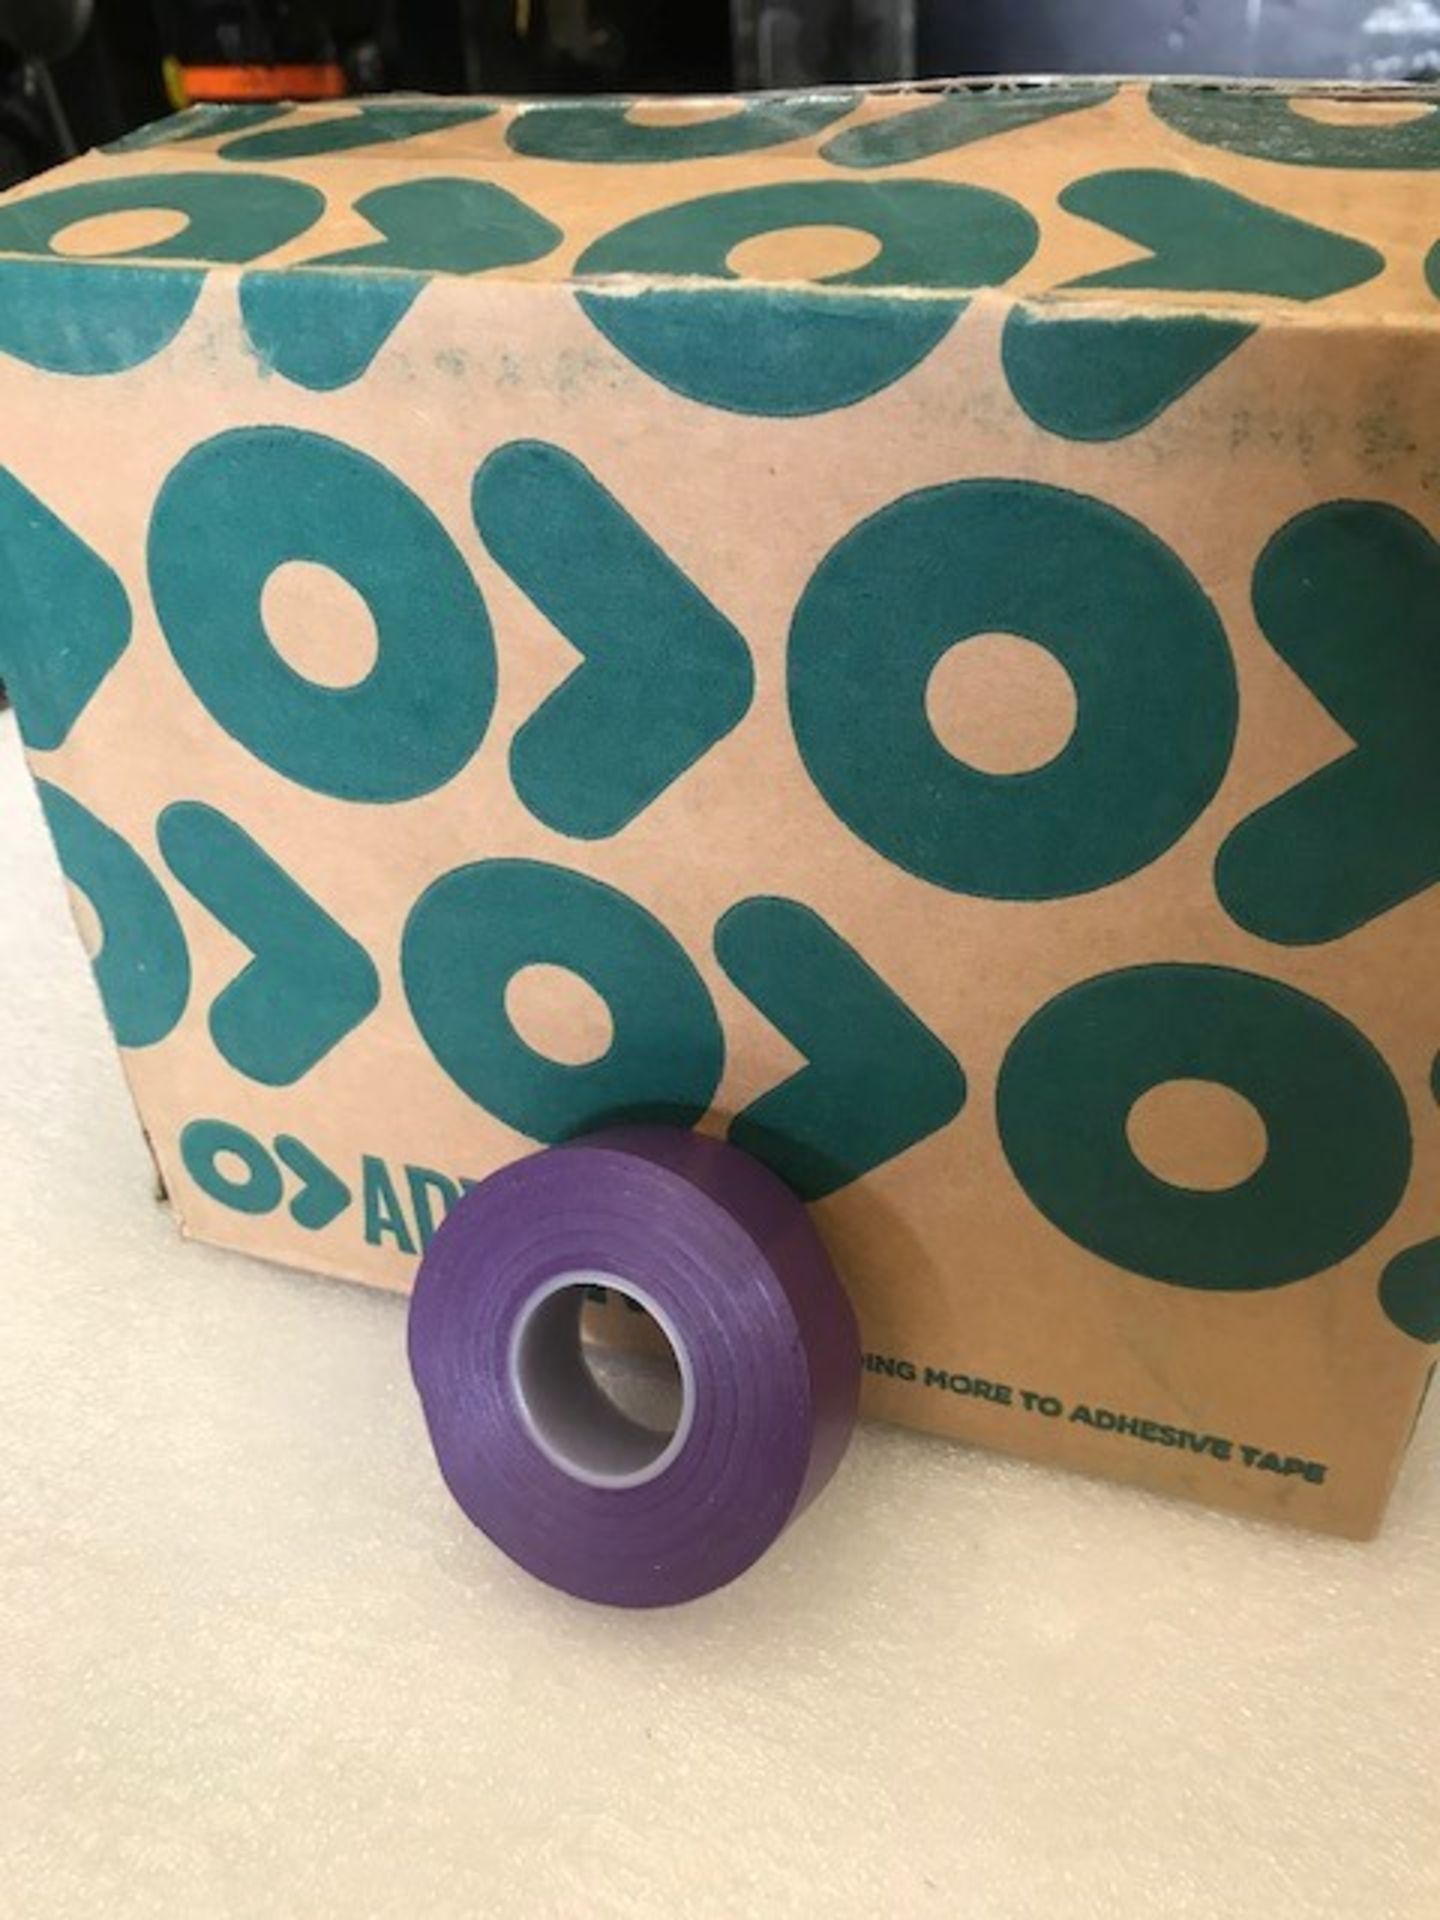 48 x Rolls Of Violet PVC Tape - New & Boxed - Ref: 222 - CL581 - Location: Altrincham WA14